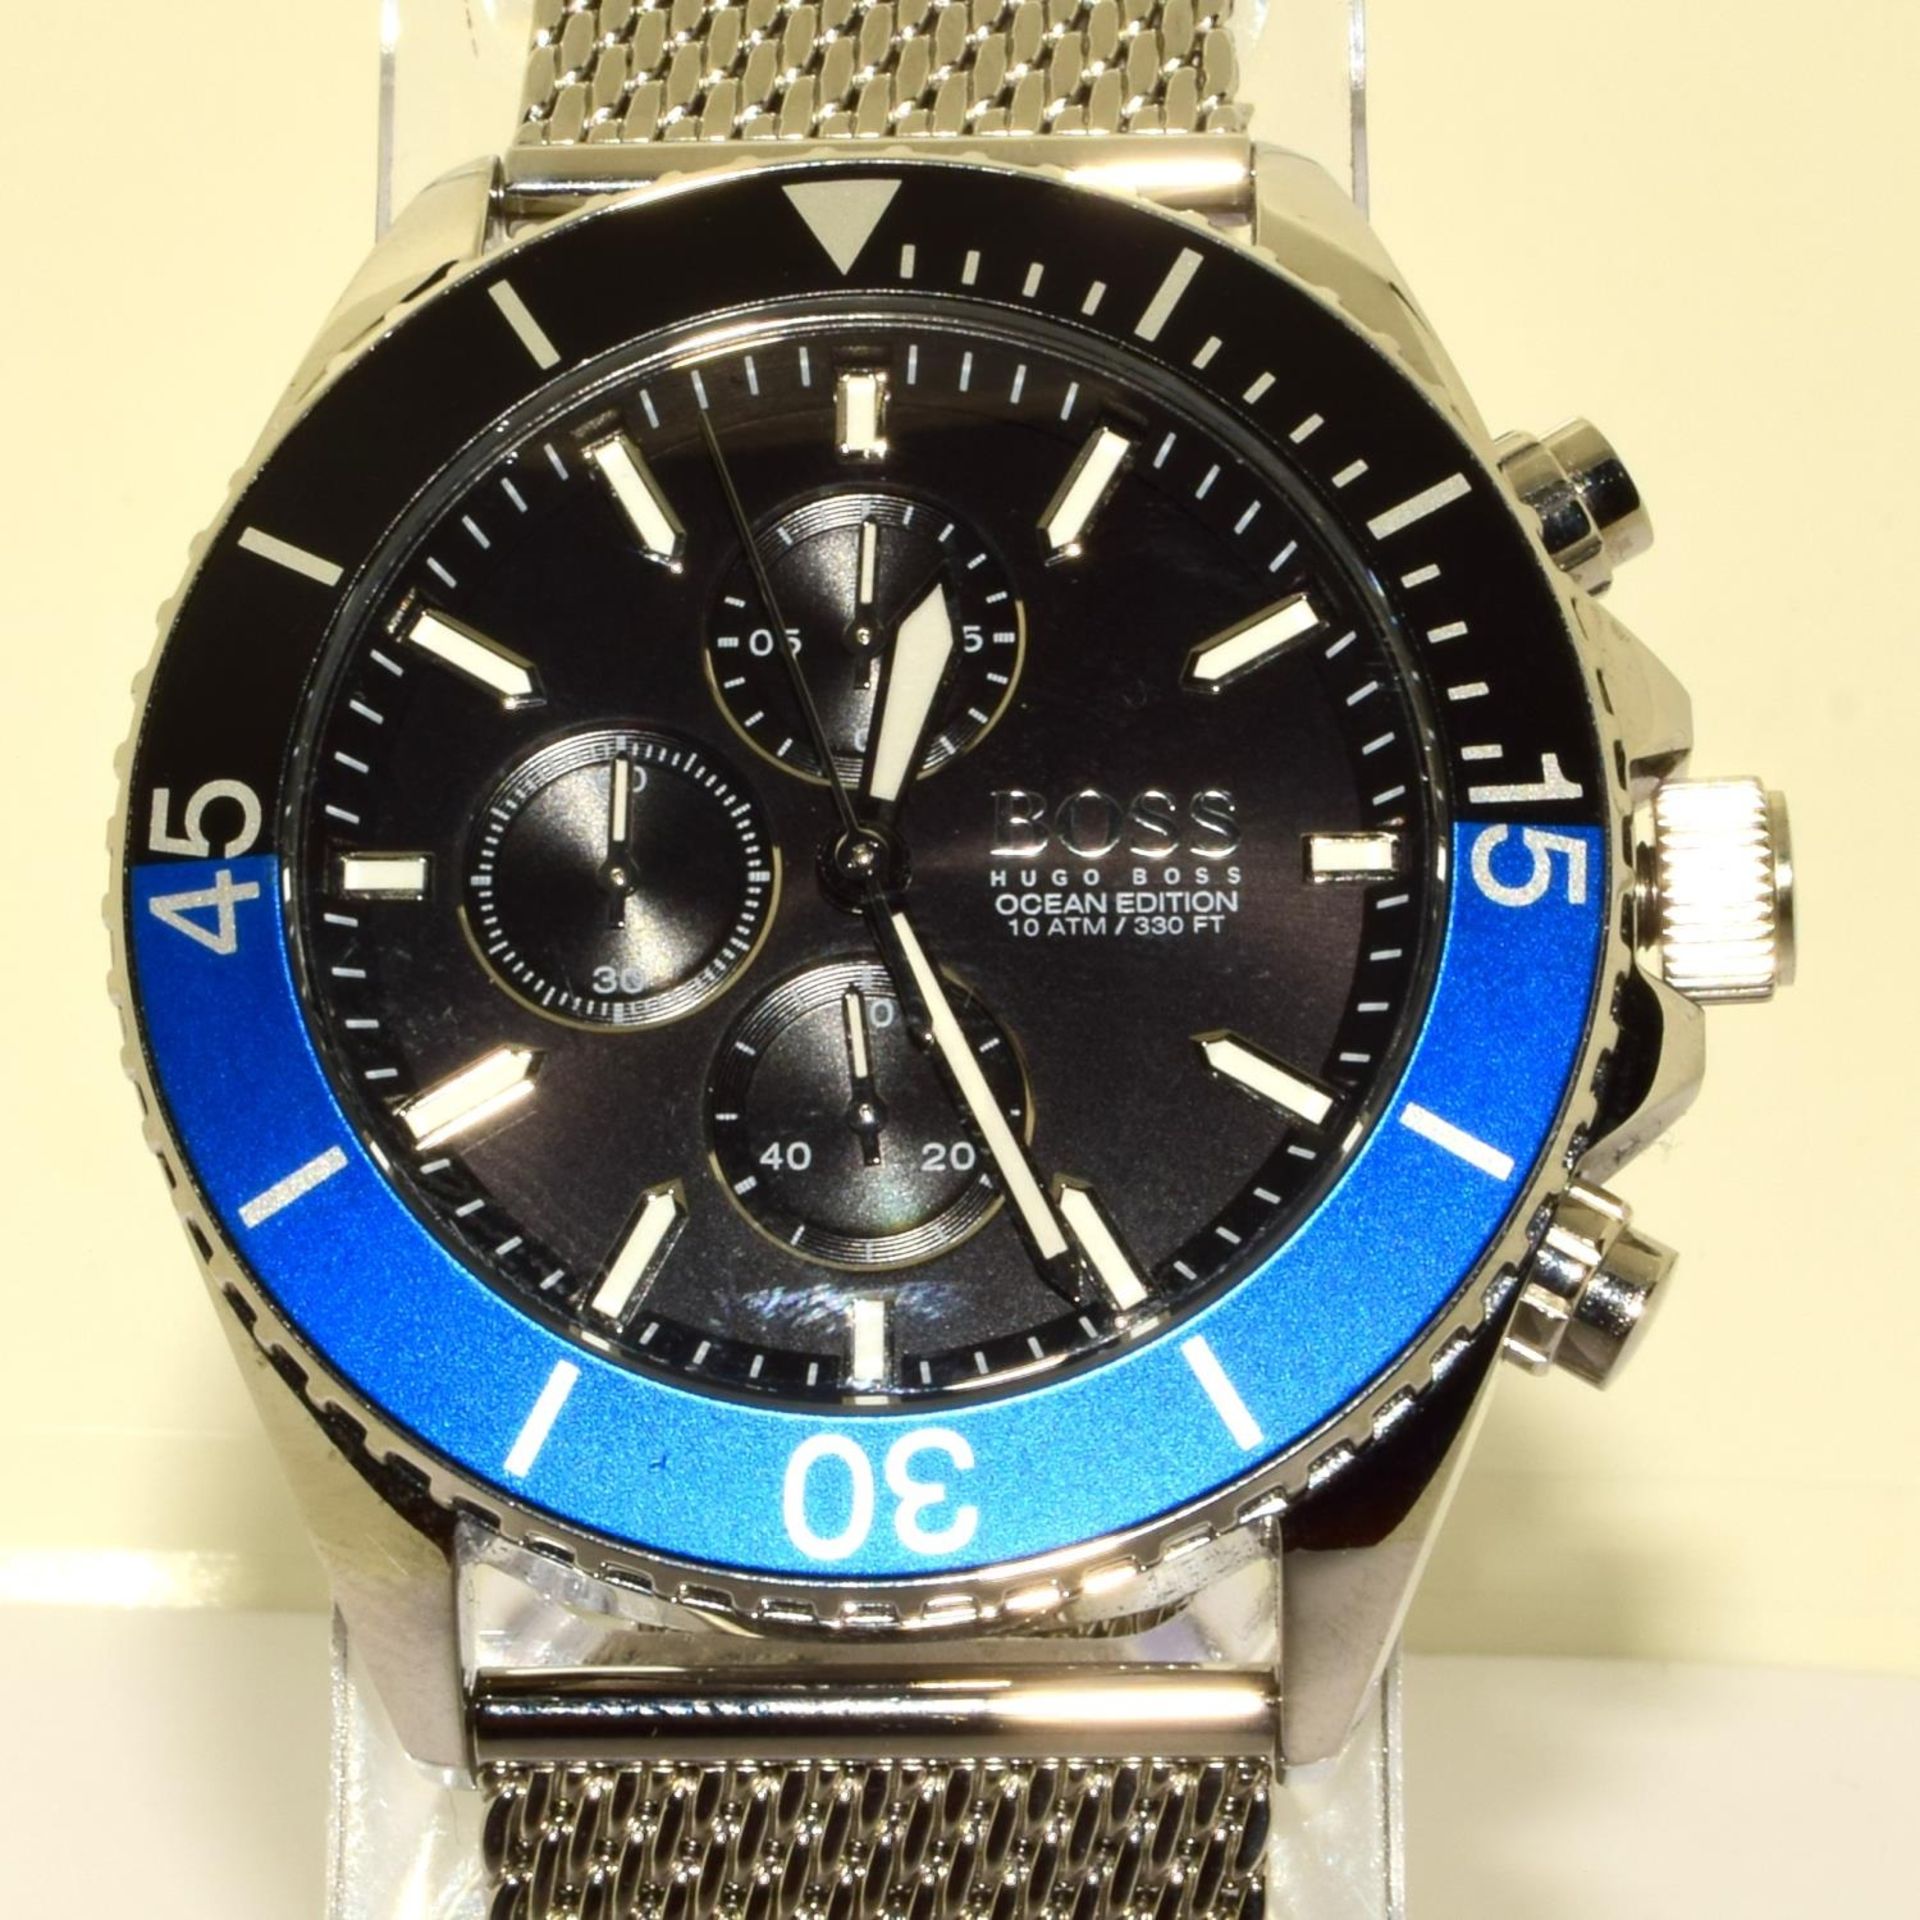 Boss ocean Edition chronograph fashion watch ref 22 - Image 2 of 6